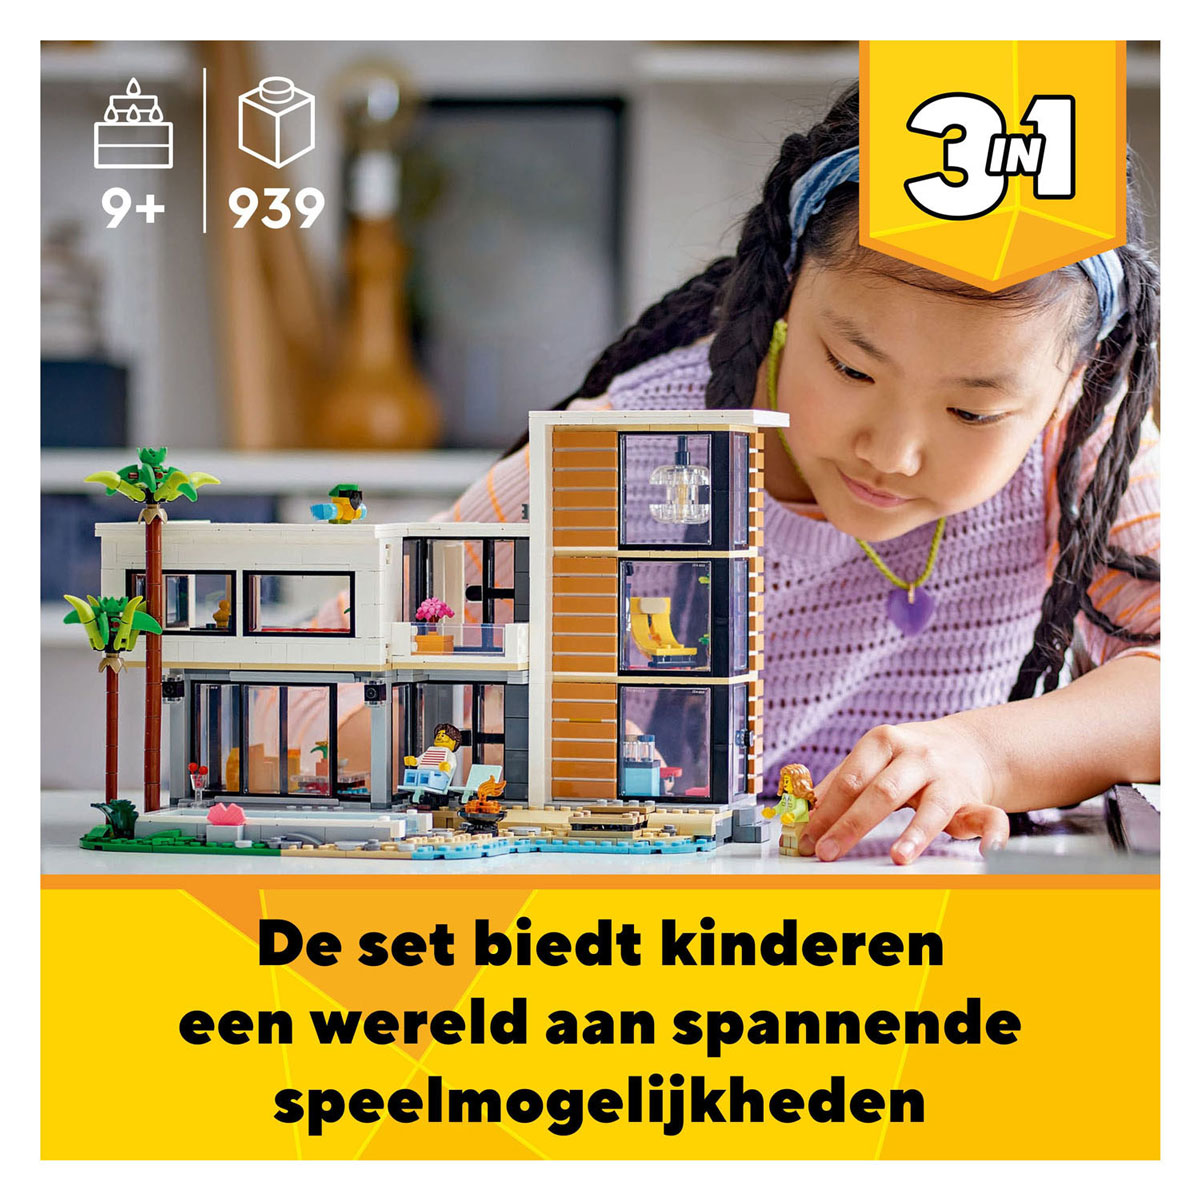 LEGO Creator 31153 Modern Huis